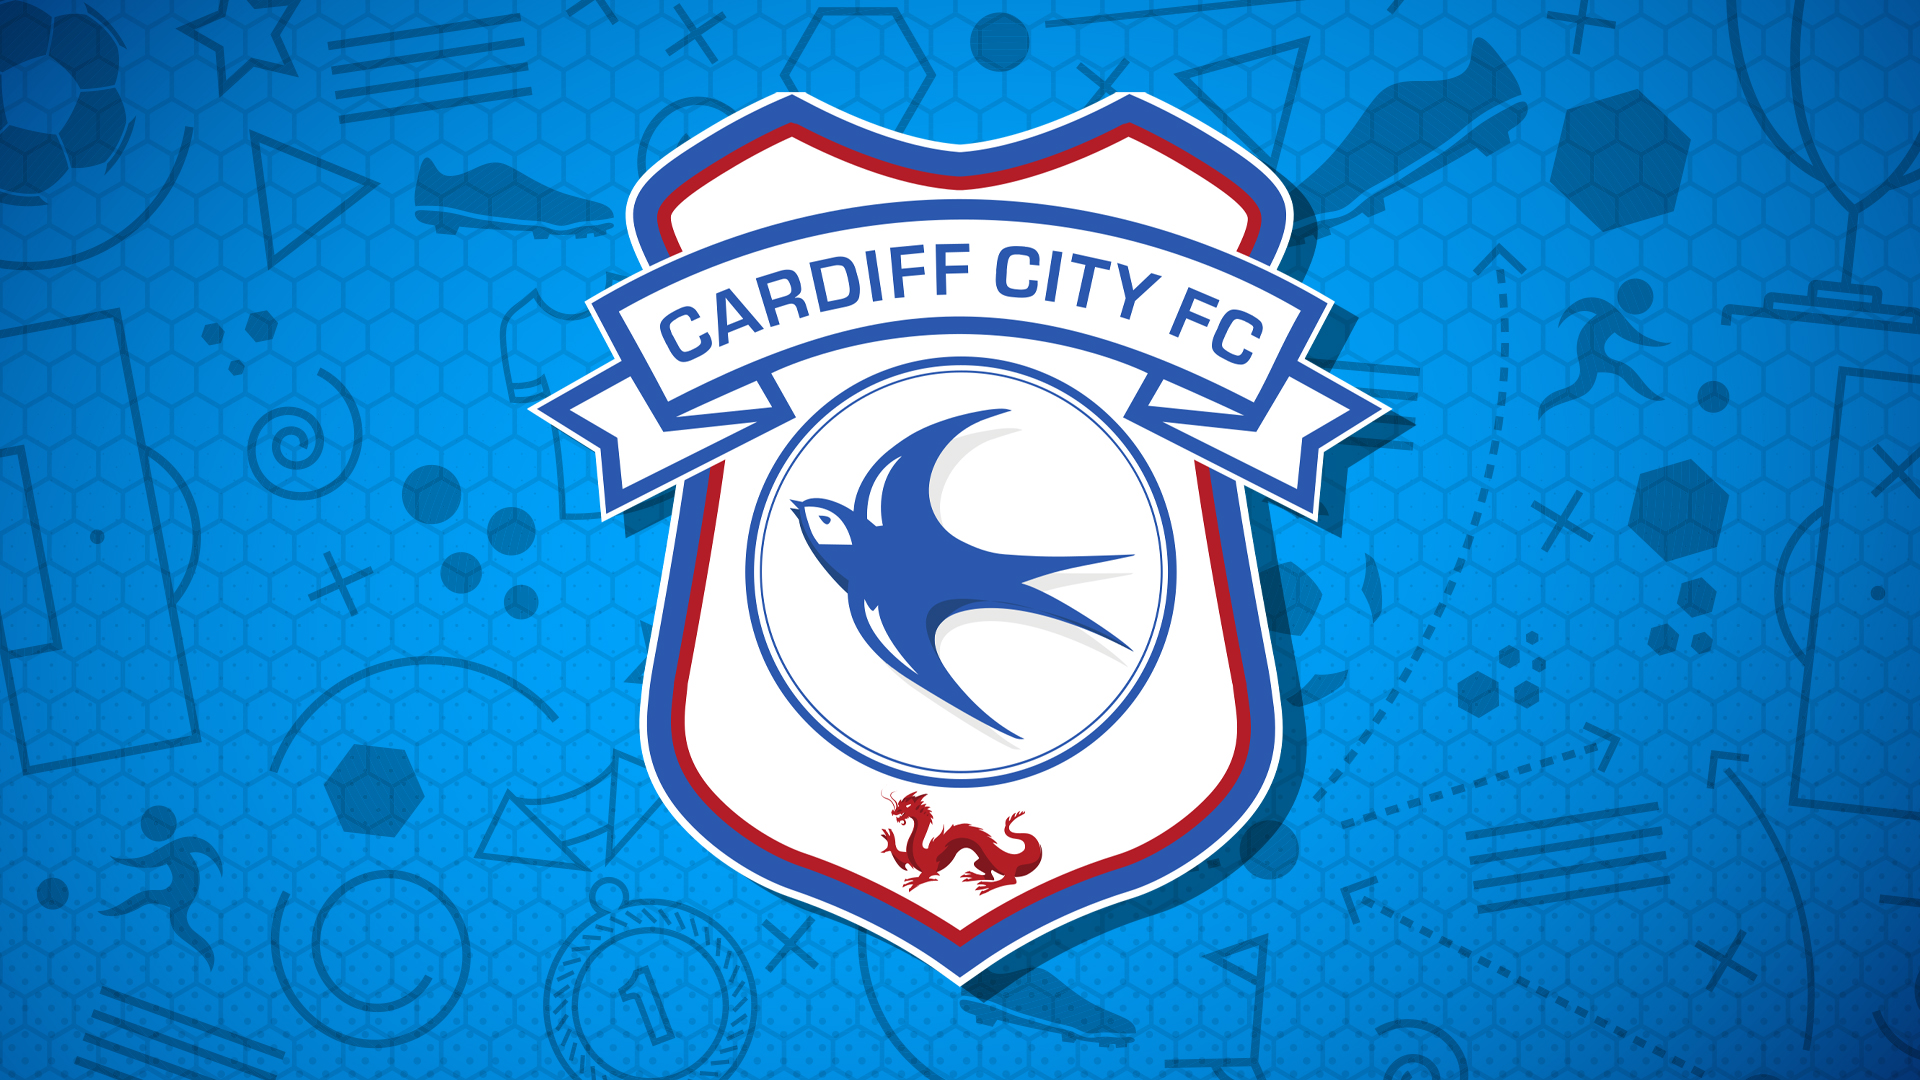 Cardiff City's badge